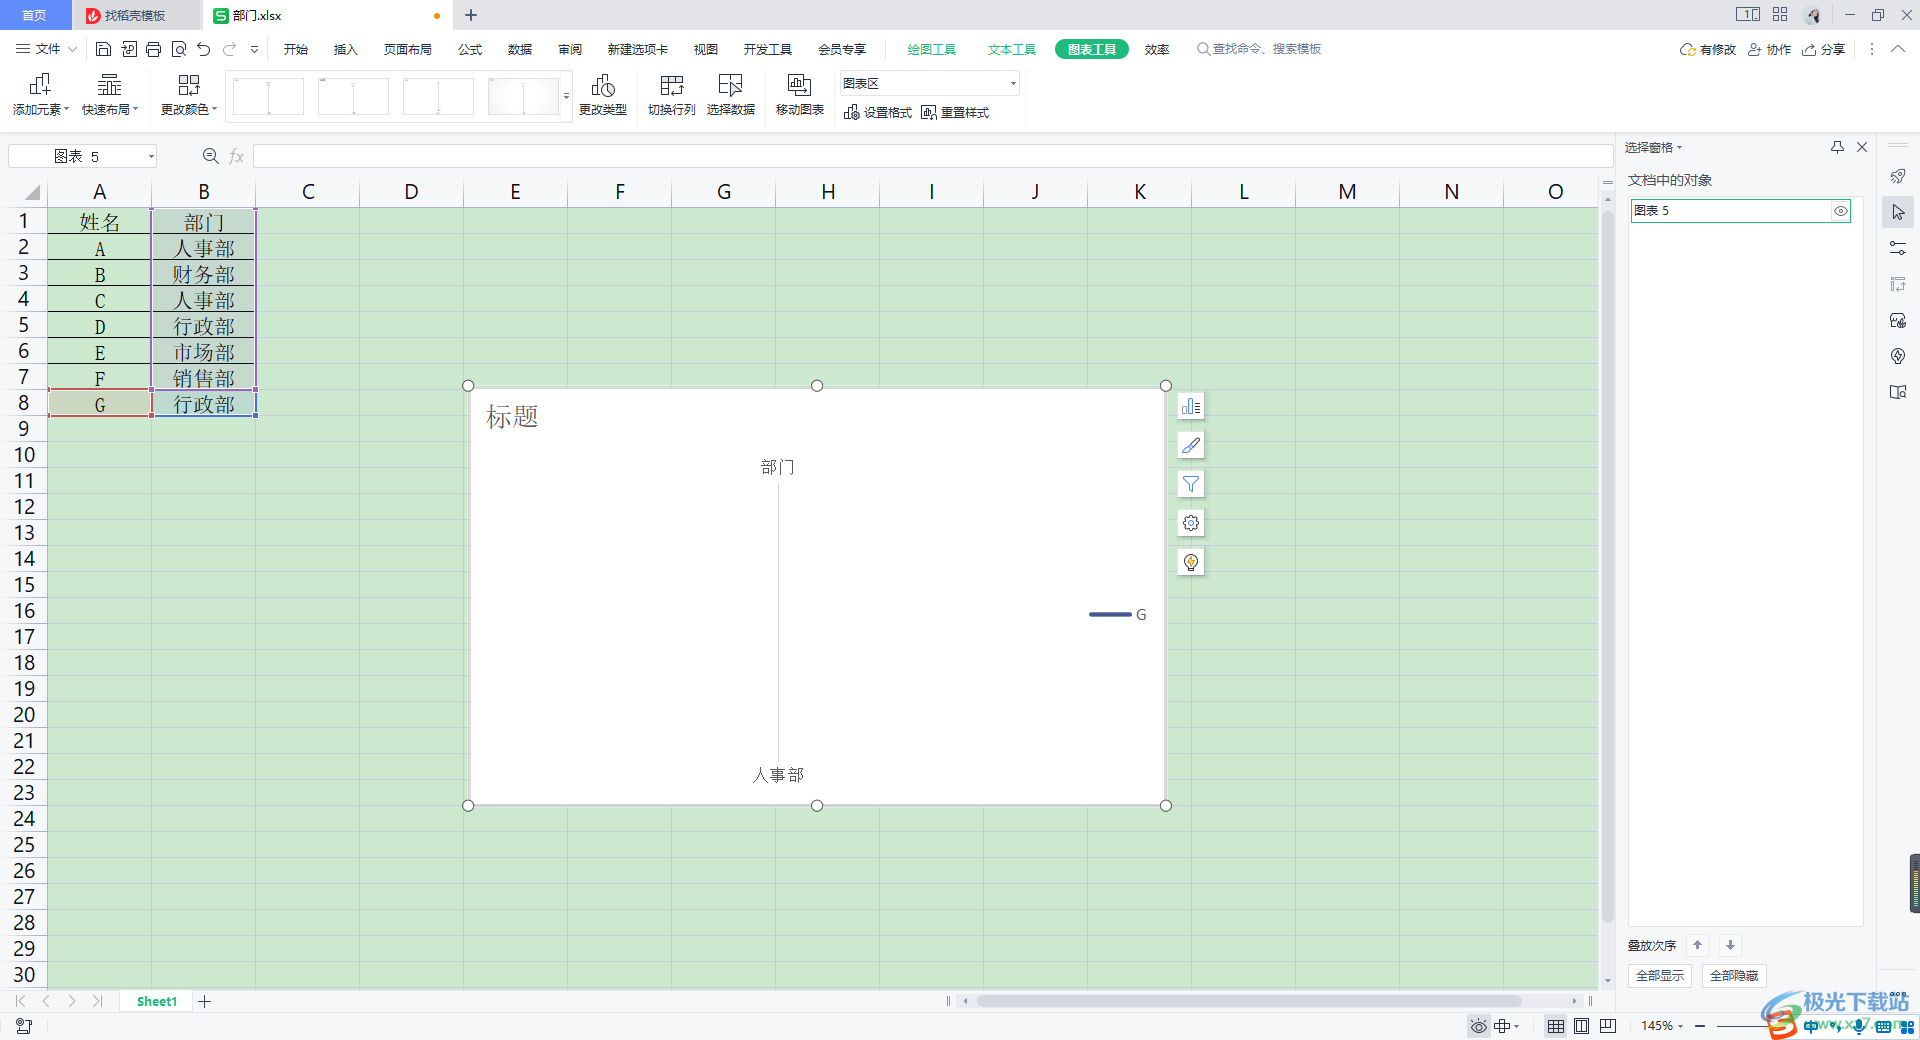 Excel一键导出选区内的图片，非选区不导出 - 知乎